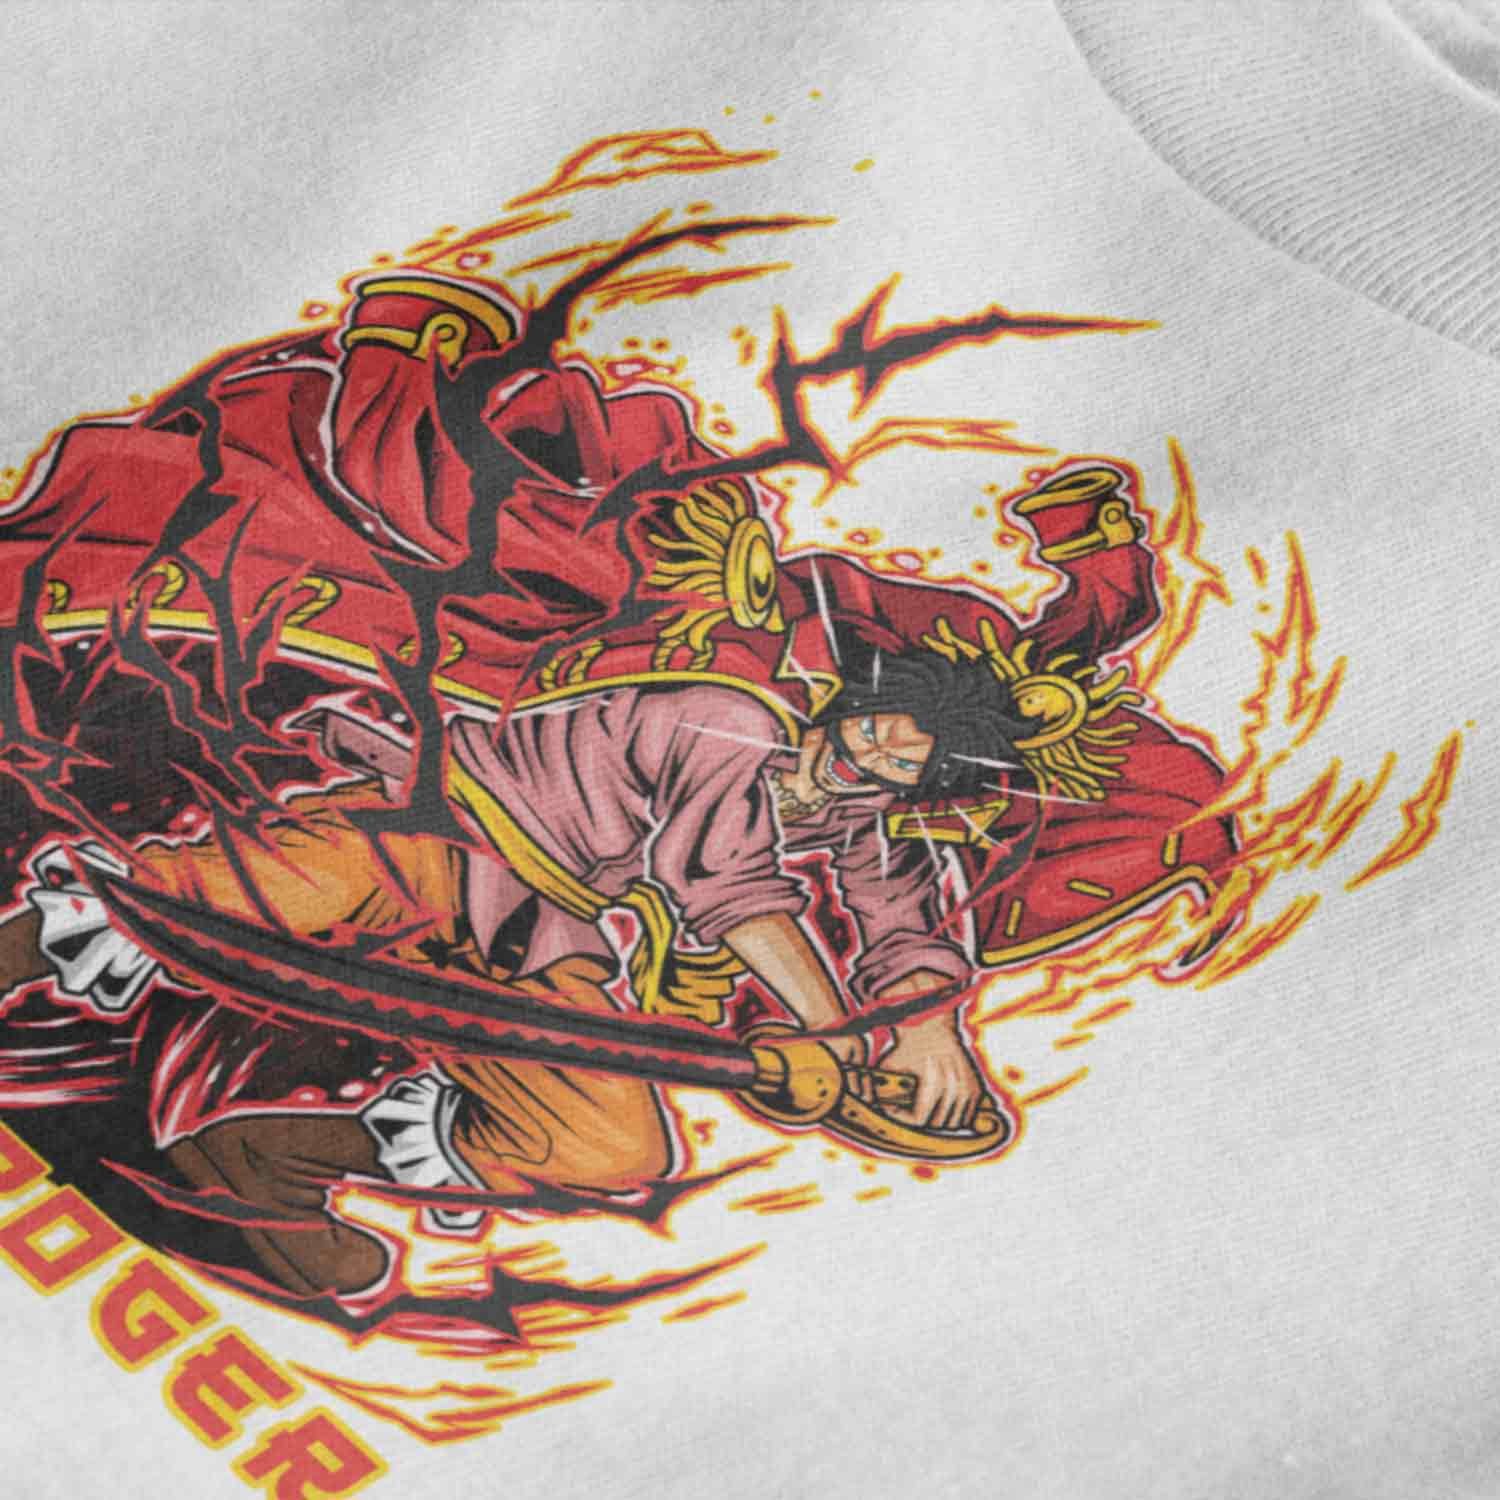 One Piece T-Shirt - Vintage official merch